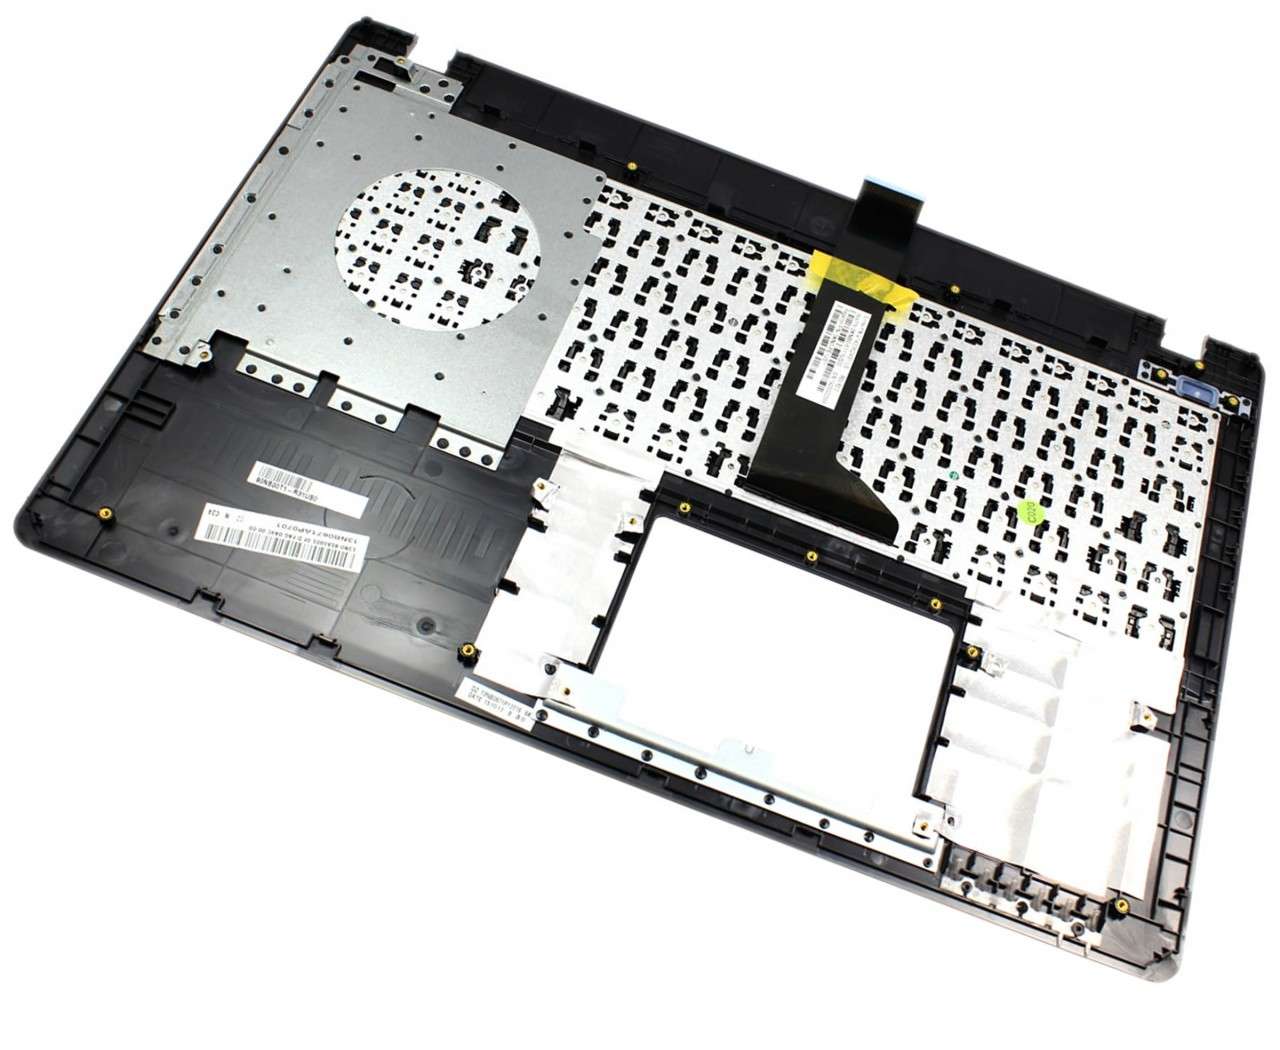 Tastatura Asus F550LB neagra cu Palmrest argintiu